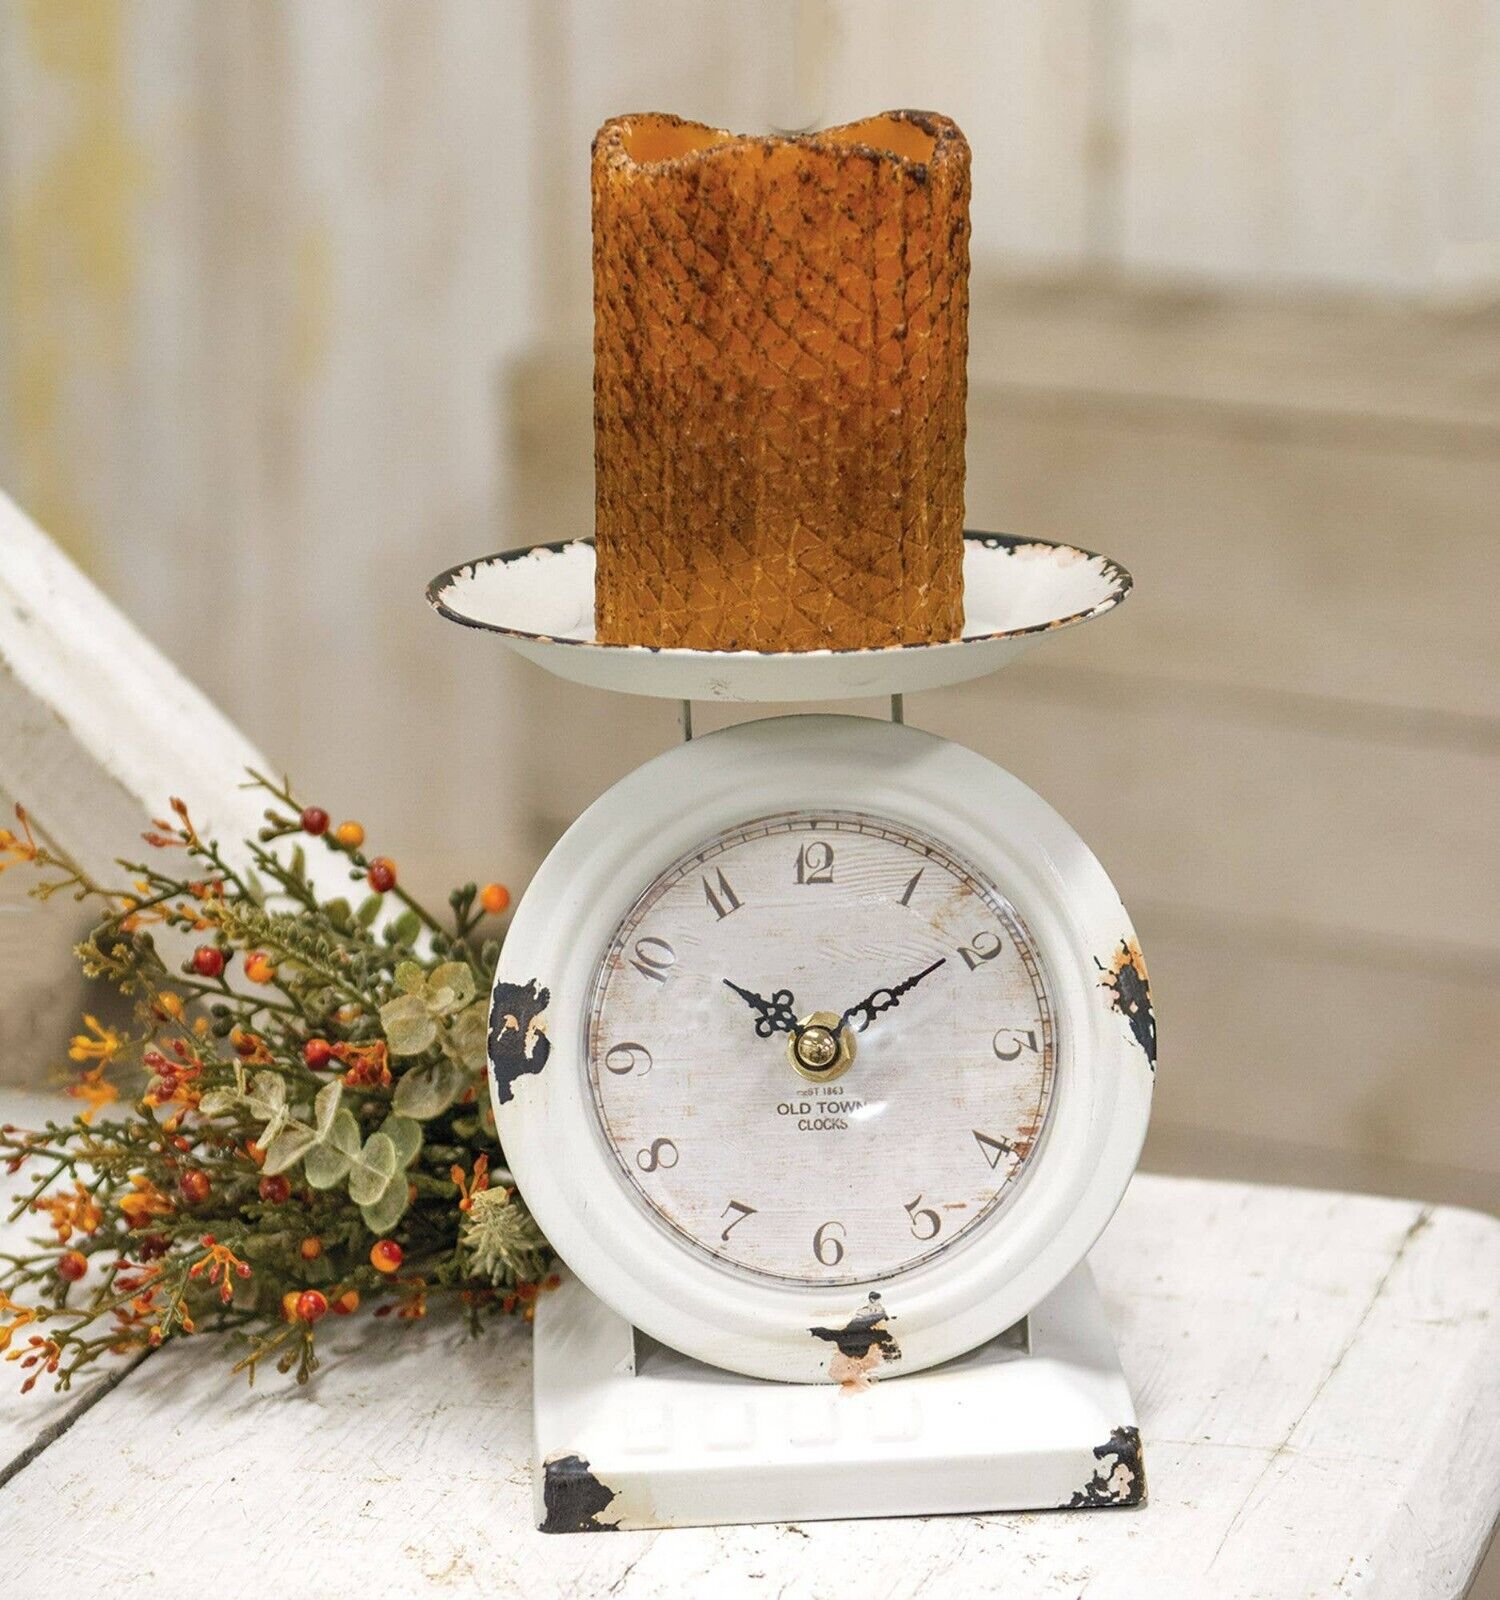 Farmhouse small Scale Clock in distressed white metal